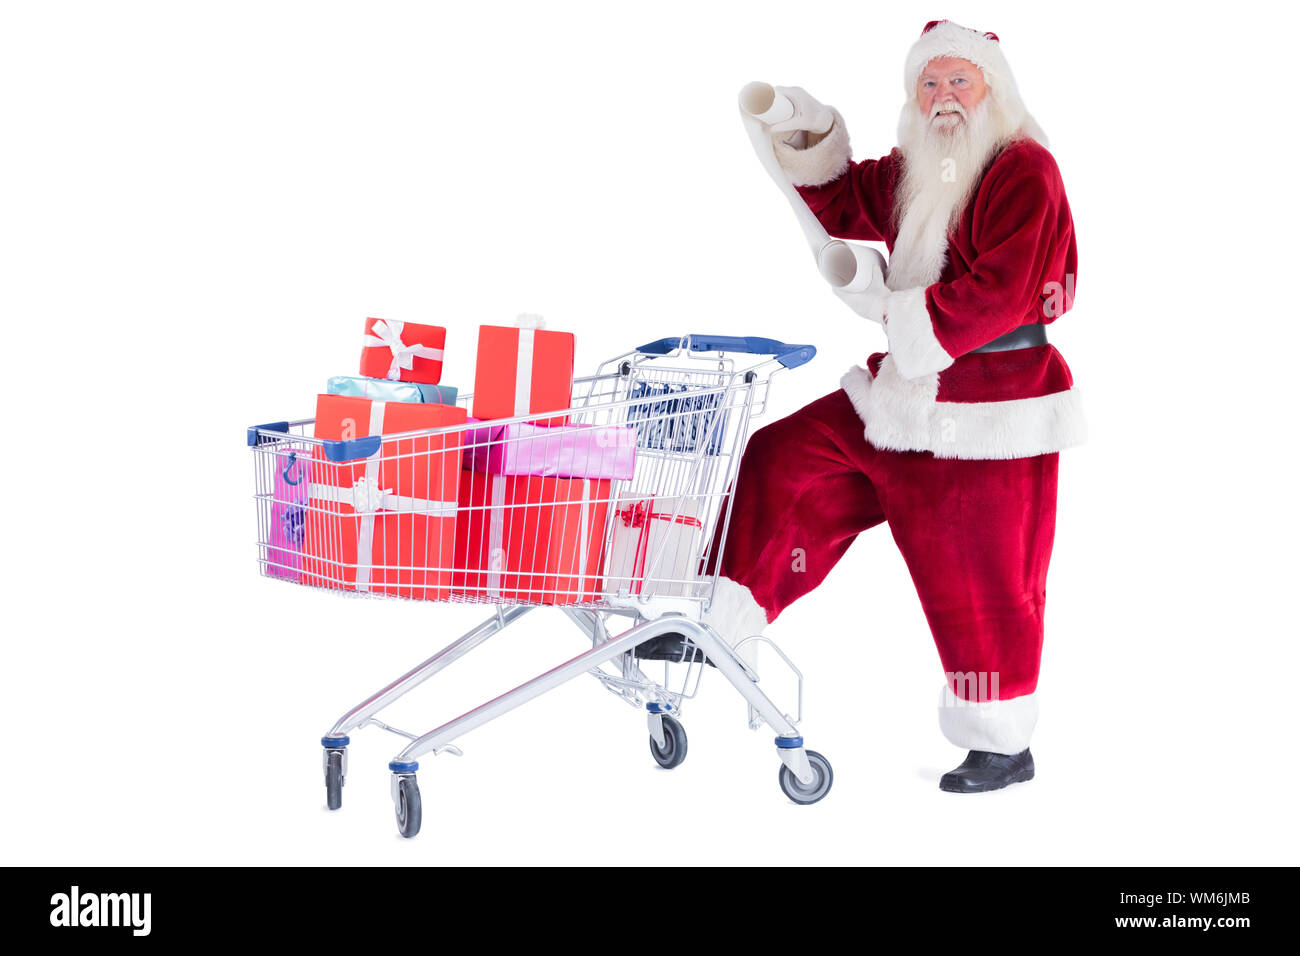 Santa pushes a shopping cart while reading on white background Stock Photo